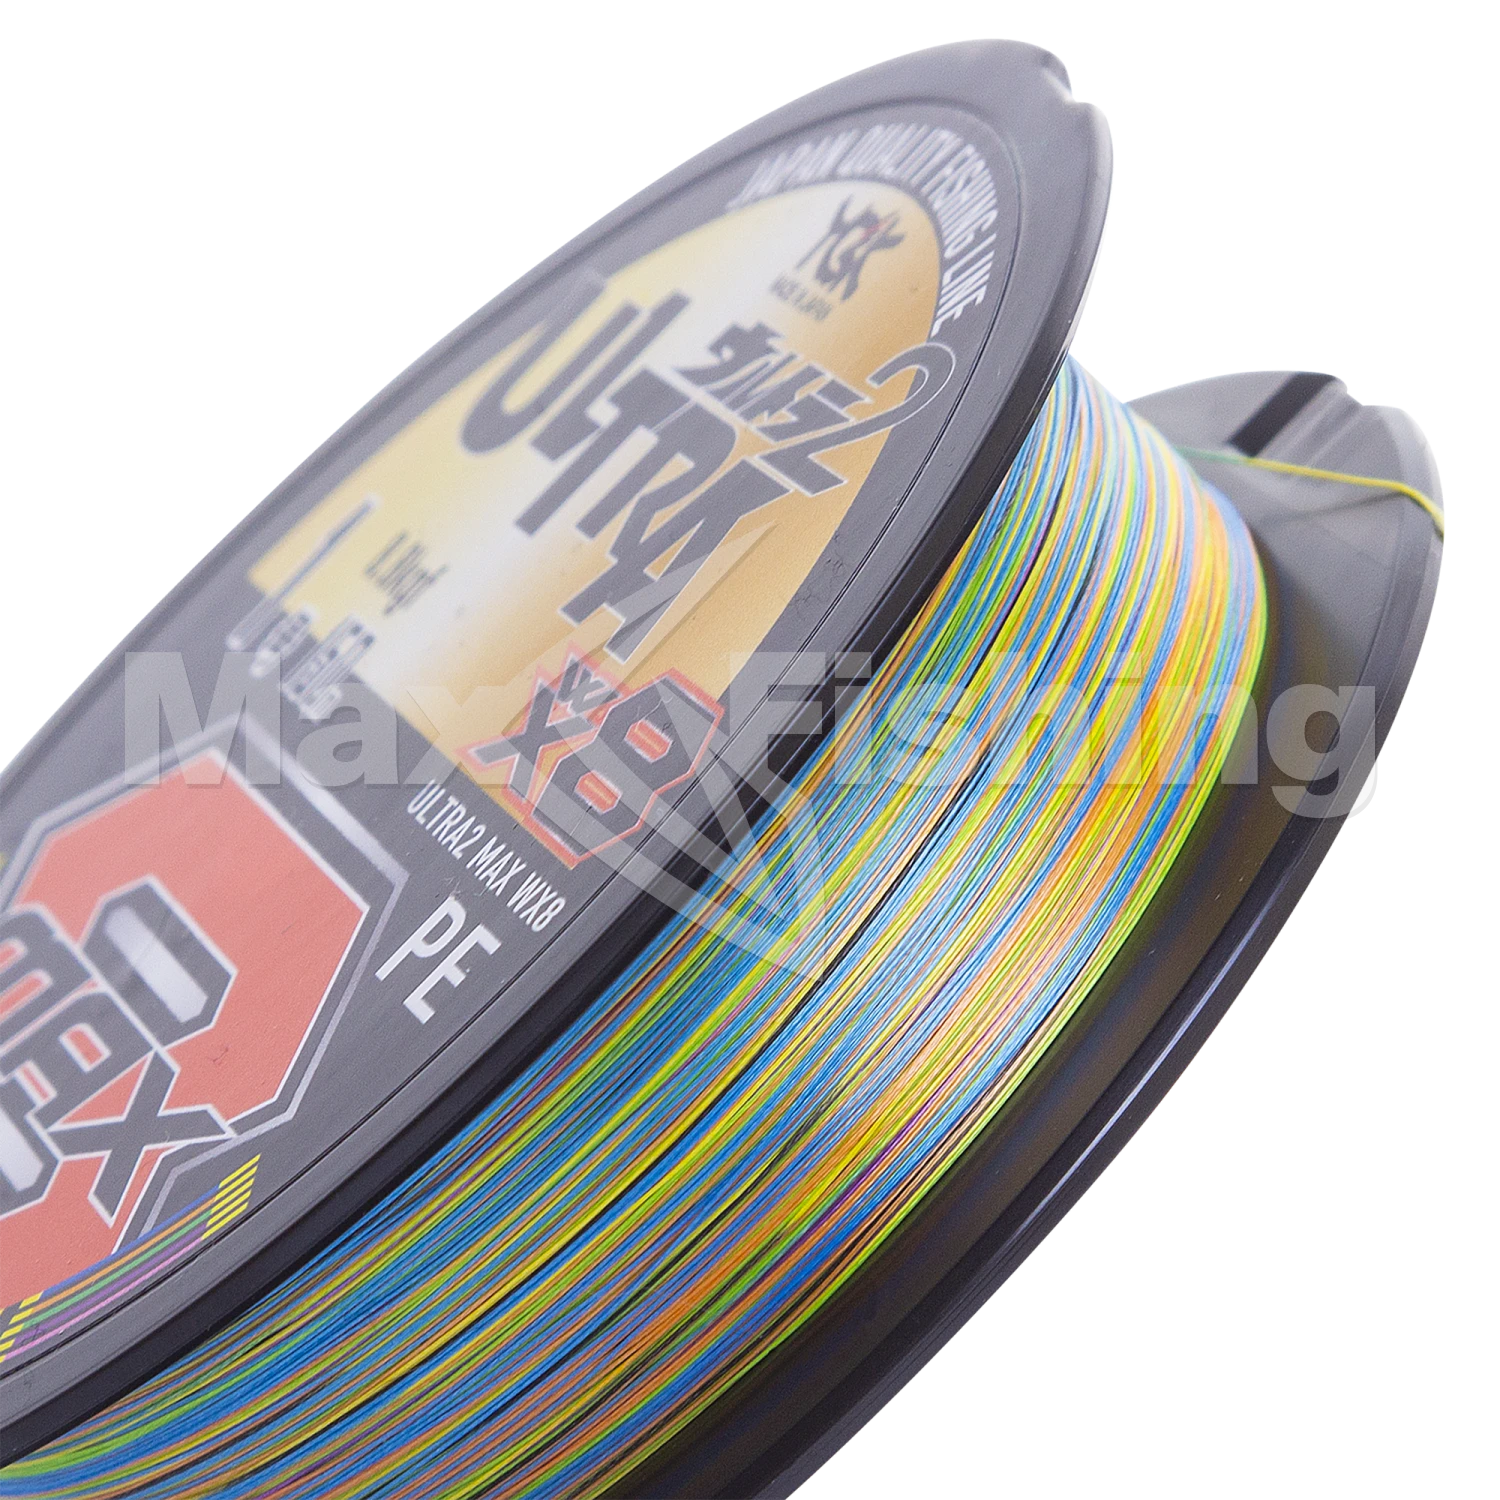 Шнур плетеный YGK Ultra2 Max WX8 #1,0 0,165мм 150м (5color)